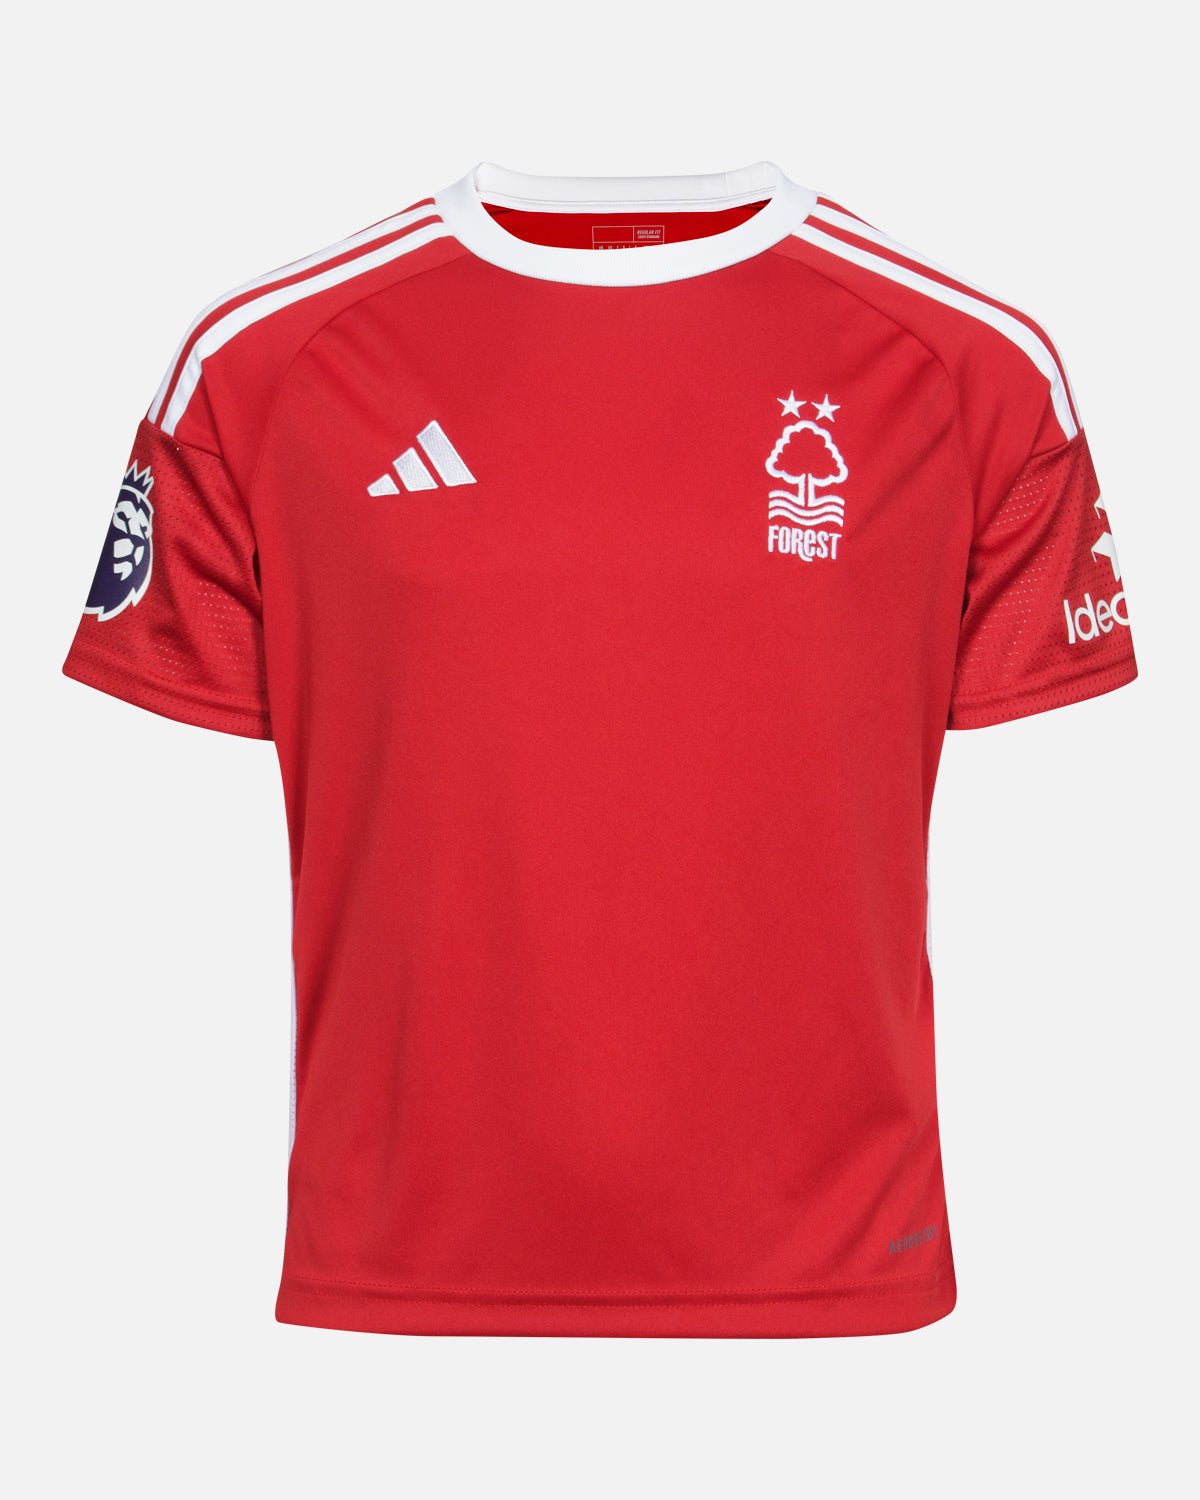 NFFC Junior Home Shirt 23-24 - Wood 11 - Nottingham Forest FC